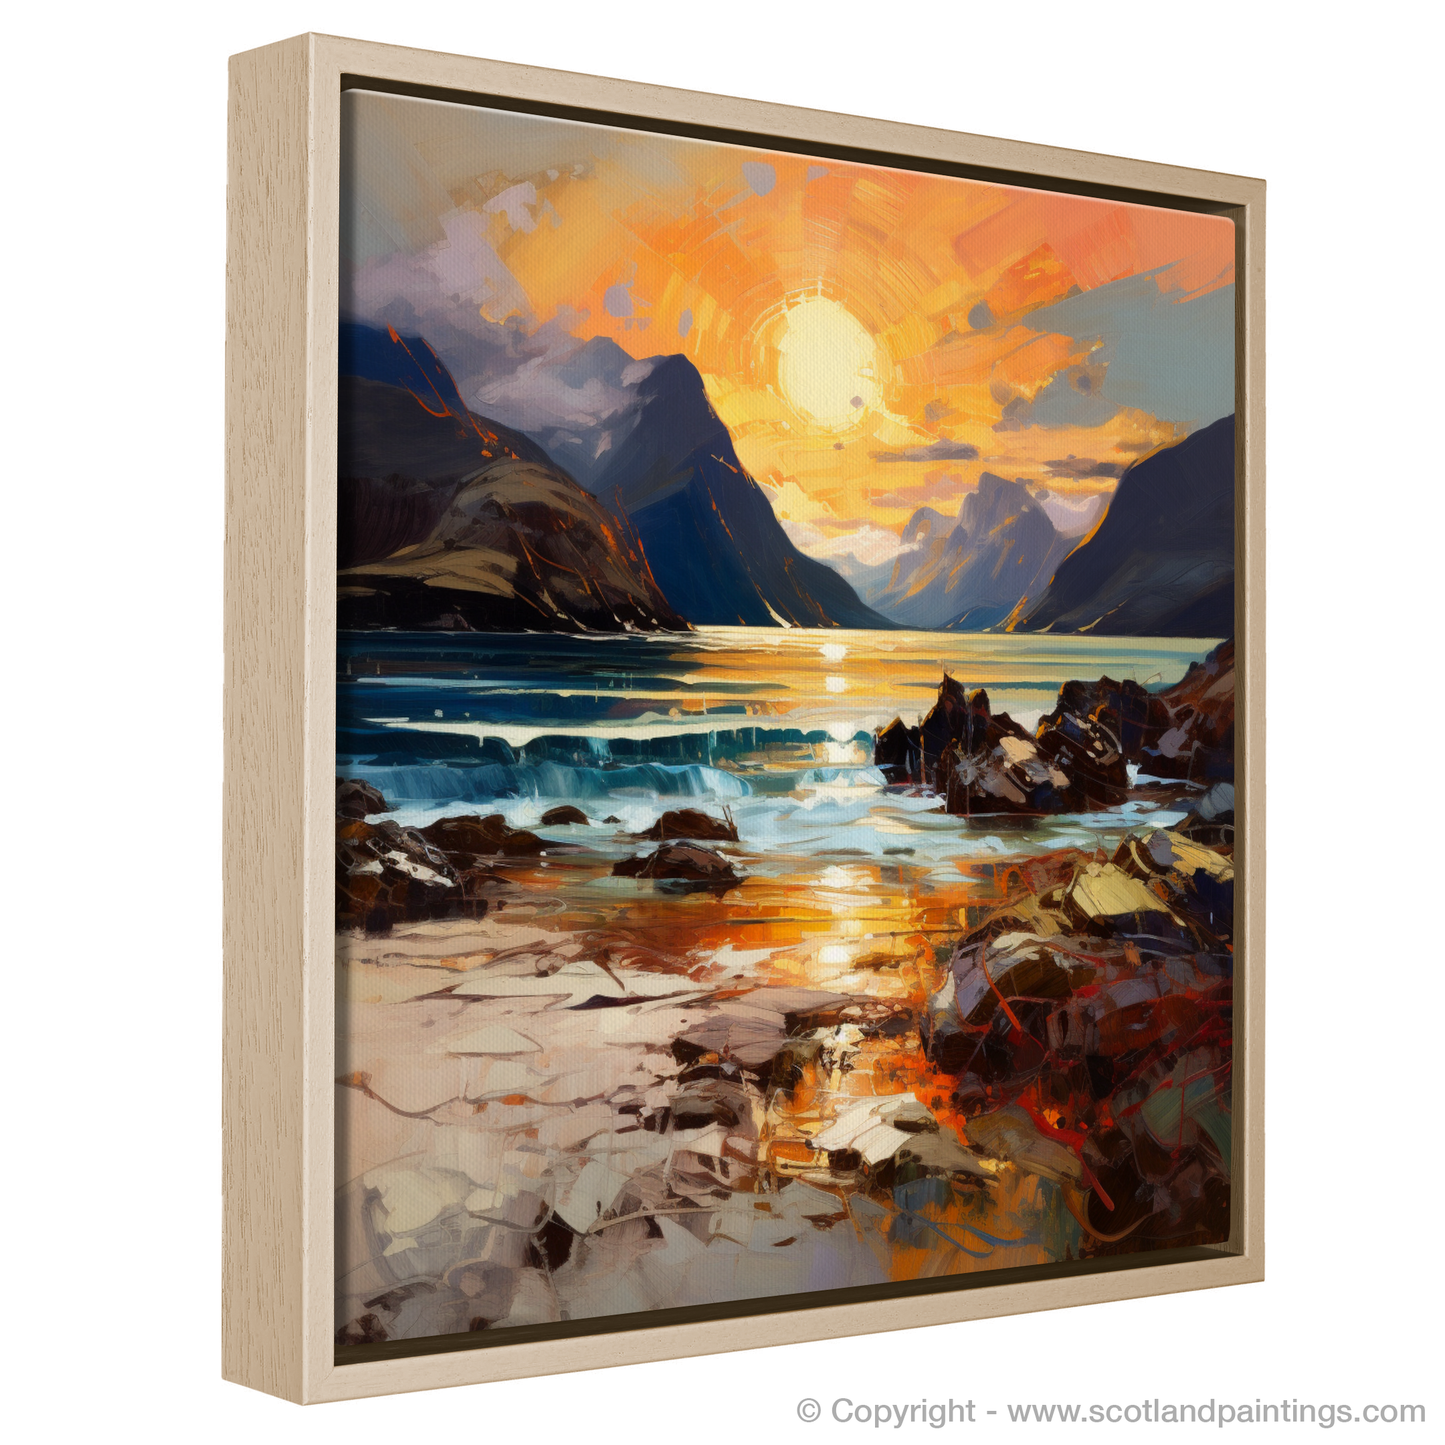 Painting and Art Print of Elgol Bay at sunset entitled "Sunset Serenade at Elgol Bay".